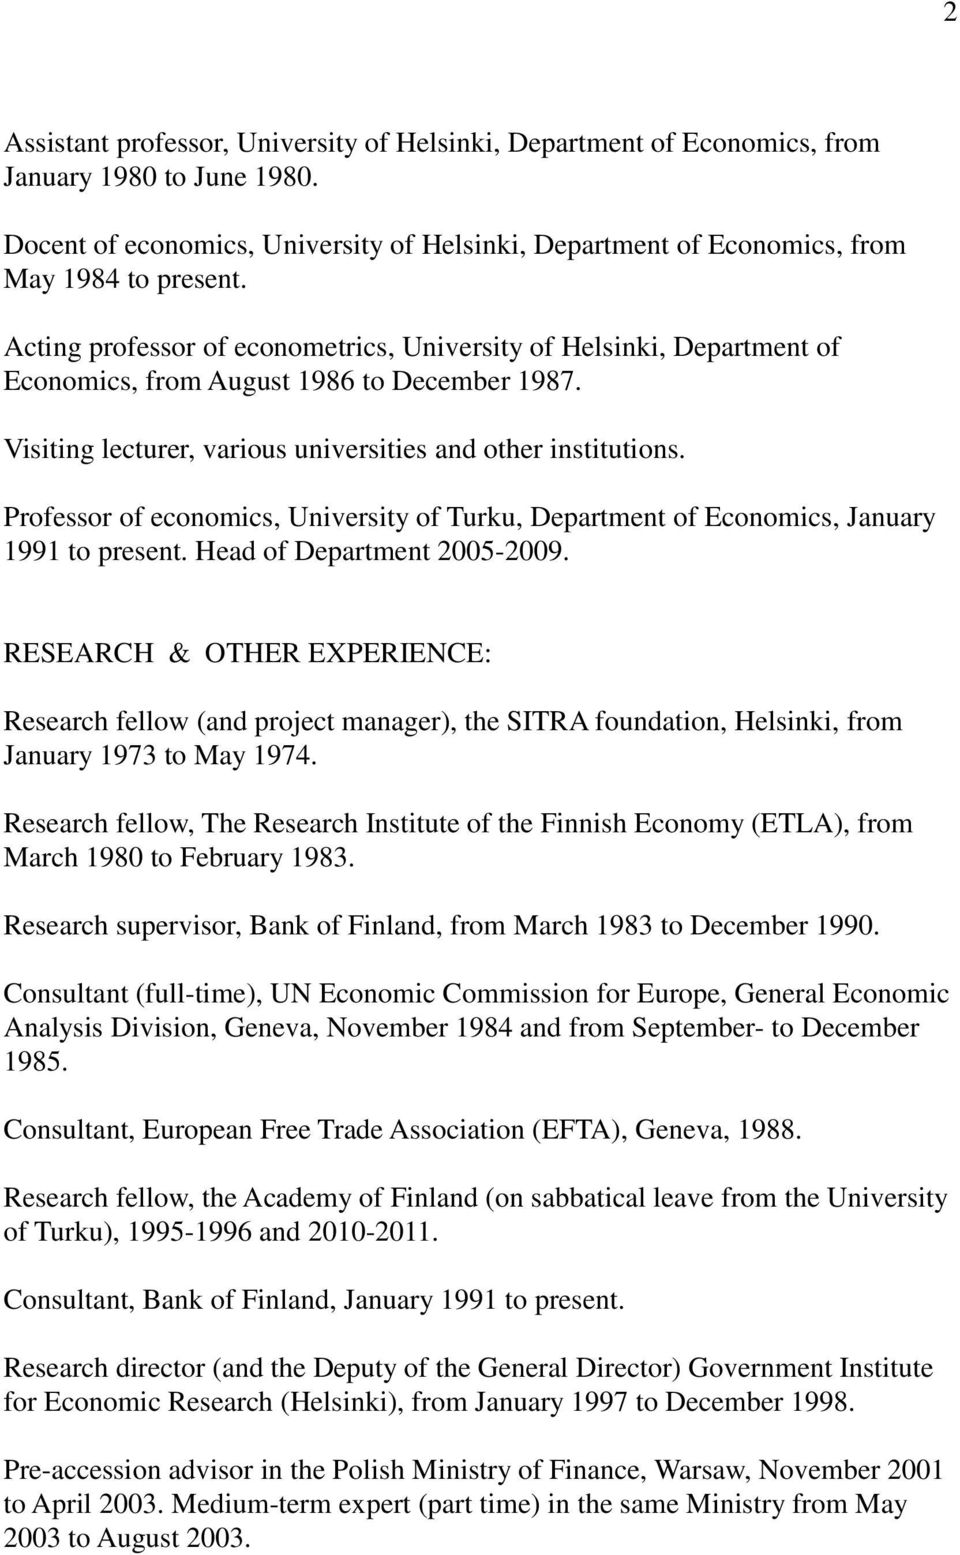 Professor of economics, University of Turku, Department of Economics, January 1991 to present. Head of Department 2005-2009.